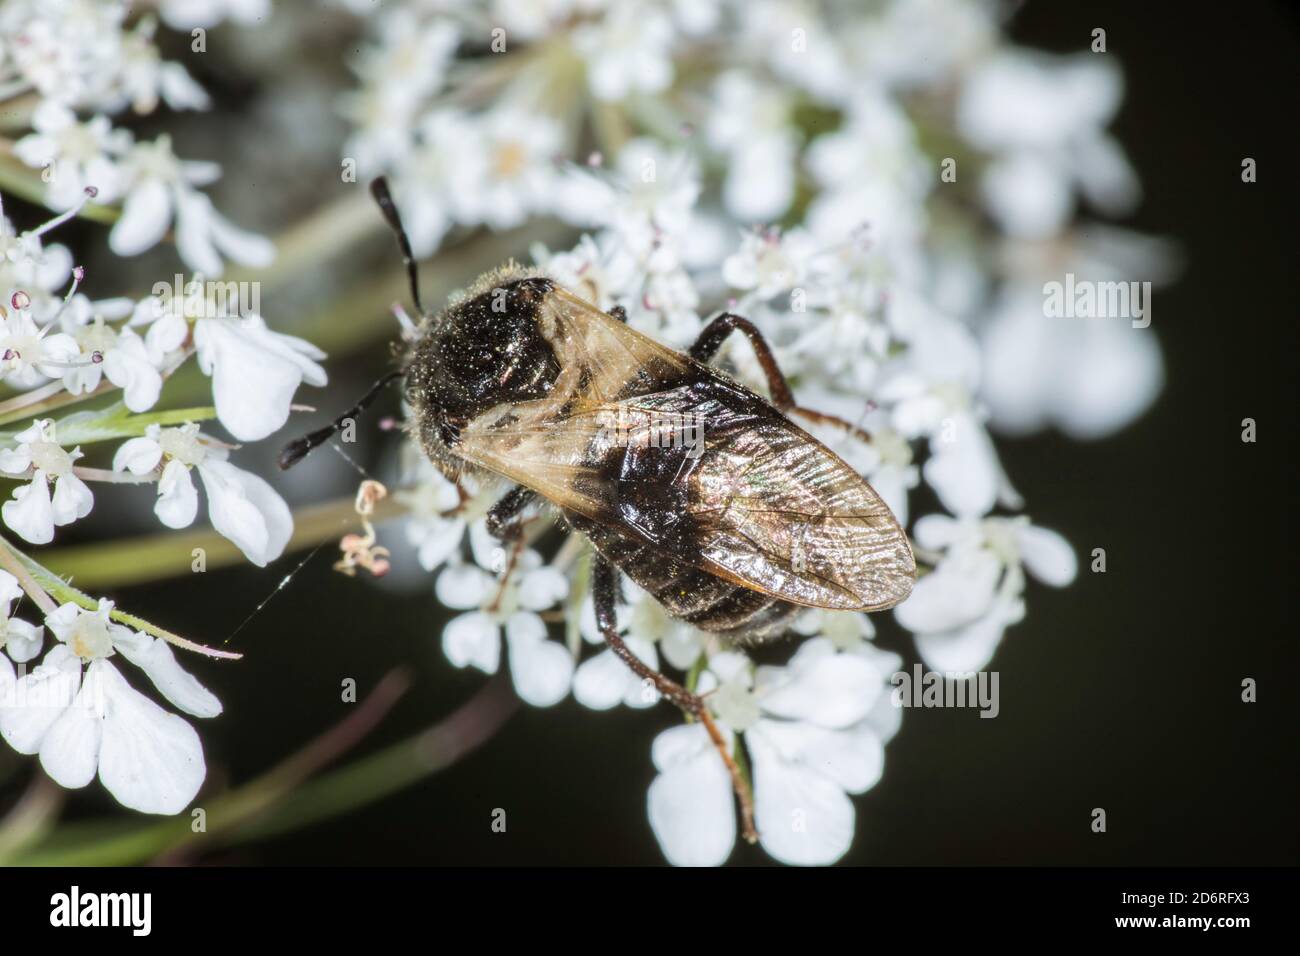 sawfly (Zaraea fasciata, Abia fasciata), on an inflorescence, Germany Stock Photo